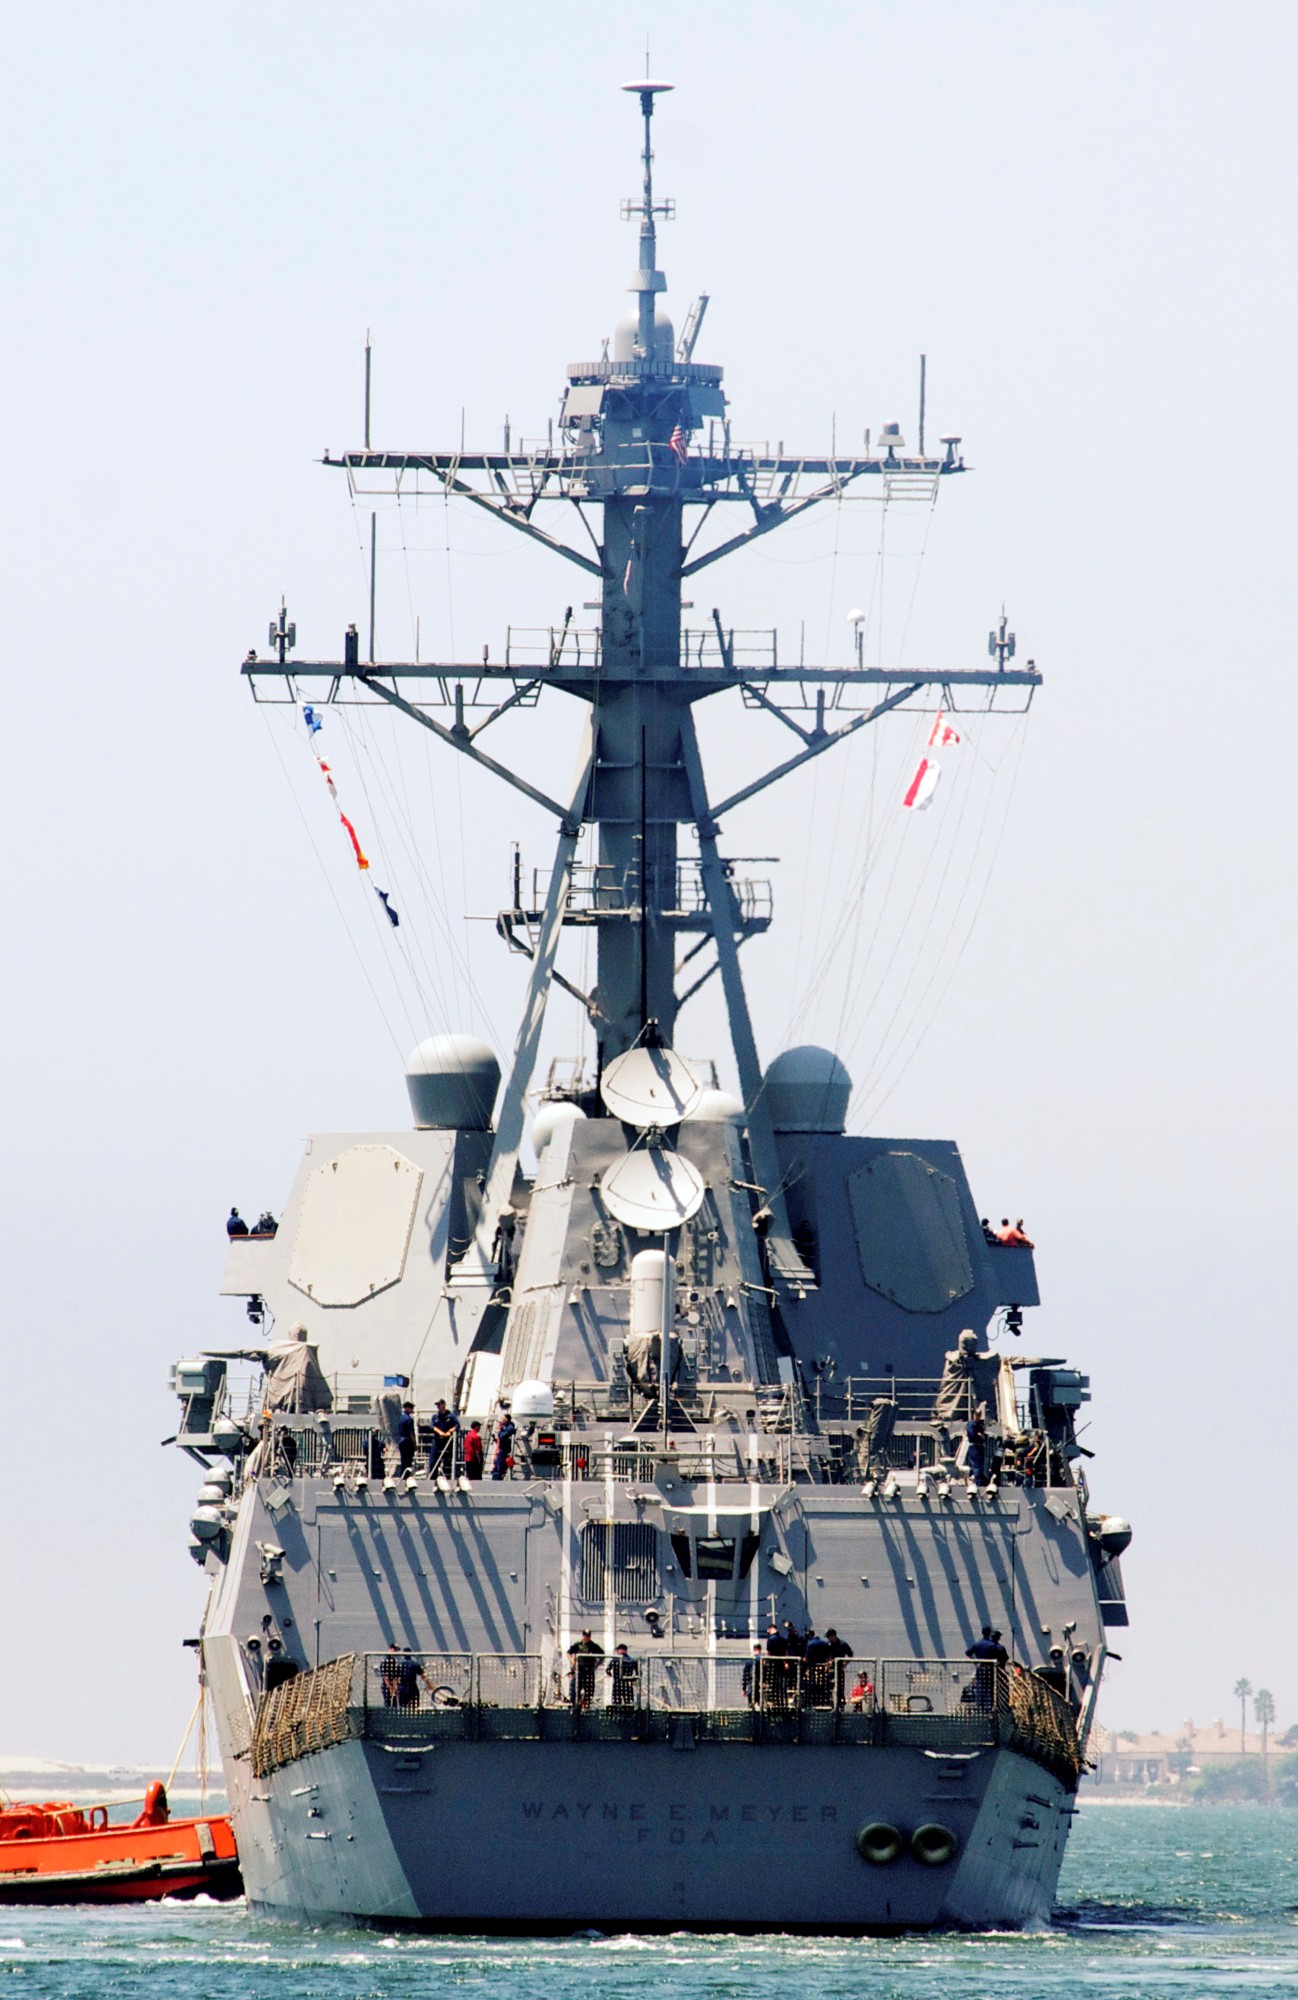 ddg-108 uss wayne e. meyer arleigh burke class guided missile destroyer aegis us navy 17p